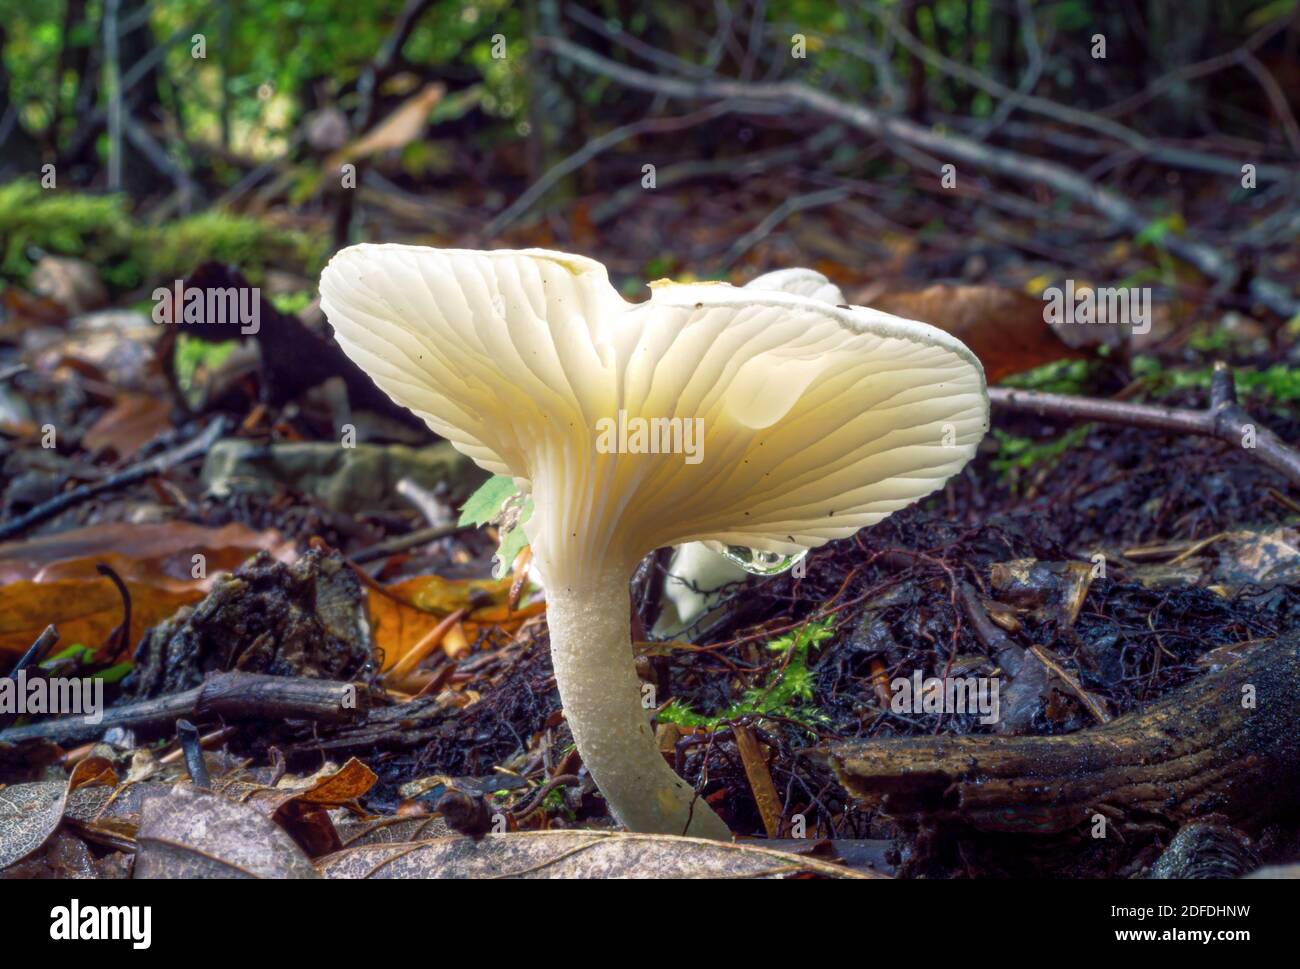 Mushroom in the forest, Hygrophorus pustulatus, autumn mushroom variety, Bavaria, Germany, Europe Stock Photo